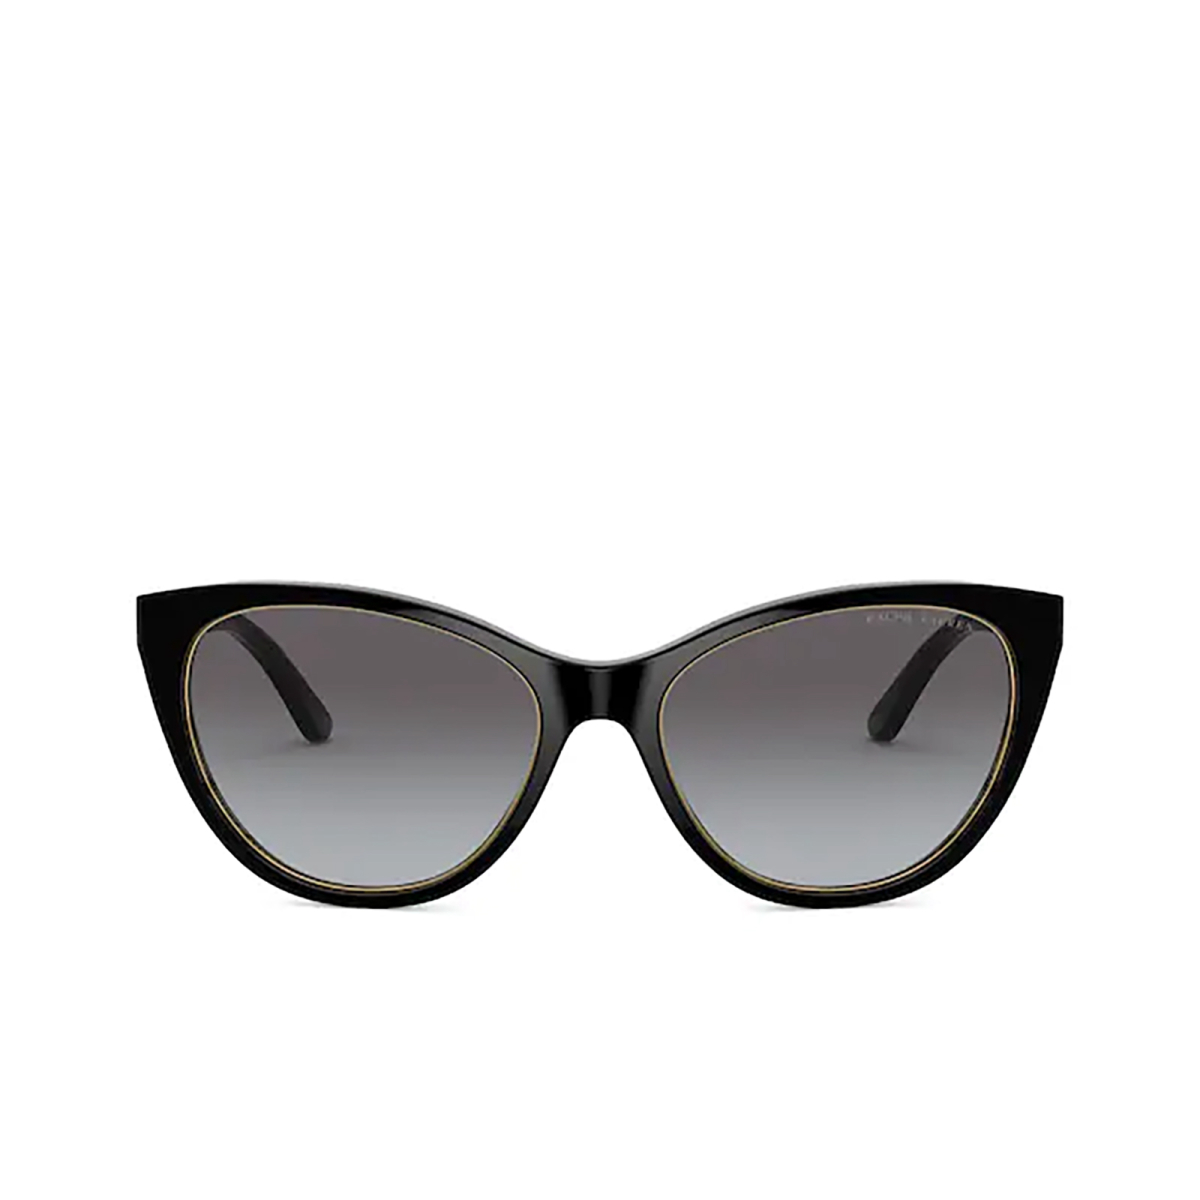 Ralph Lauren® Cat-eye Sunglasses: RL8186 color Shiny Black 50018G - front view.